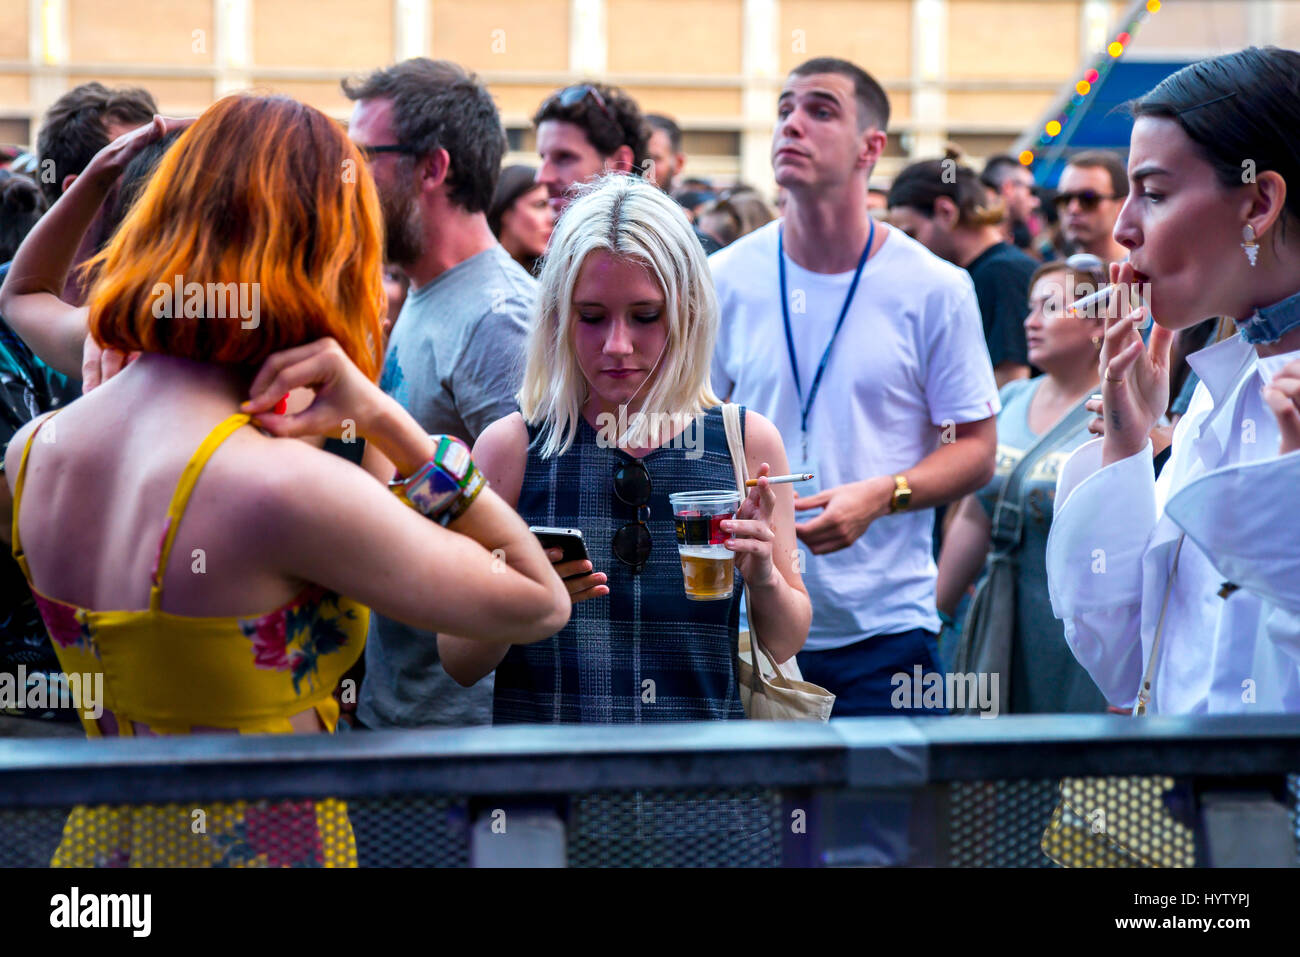 BARCELONA - JUN 17: The crowd in a concert at Sonar Festival on June 17, 2016 in Barcelona, Spain. Stock Photo